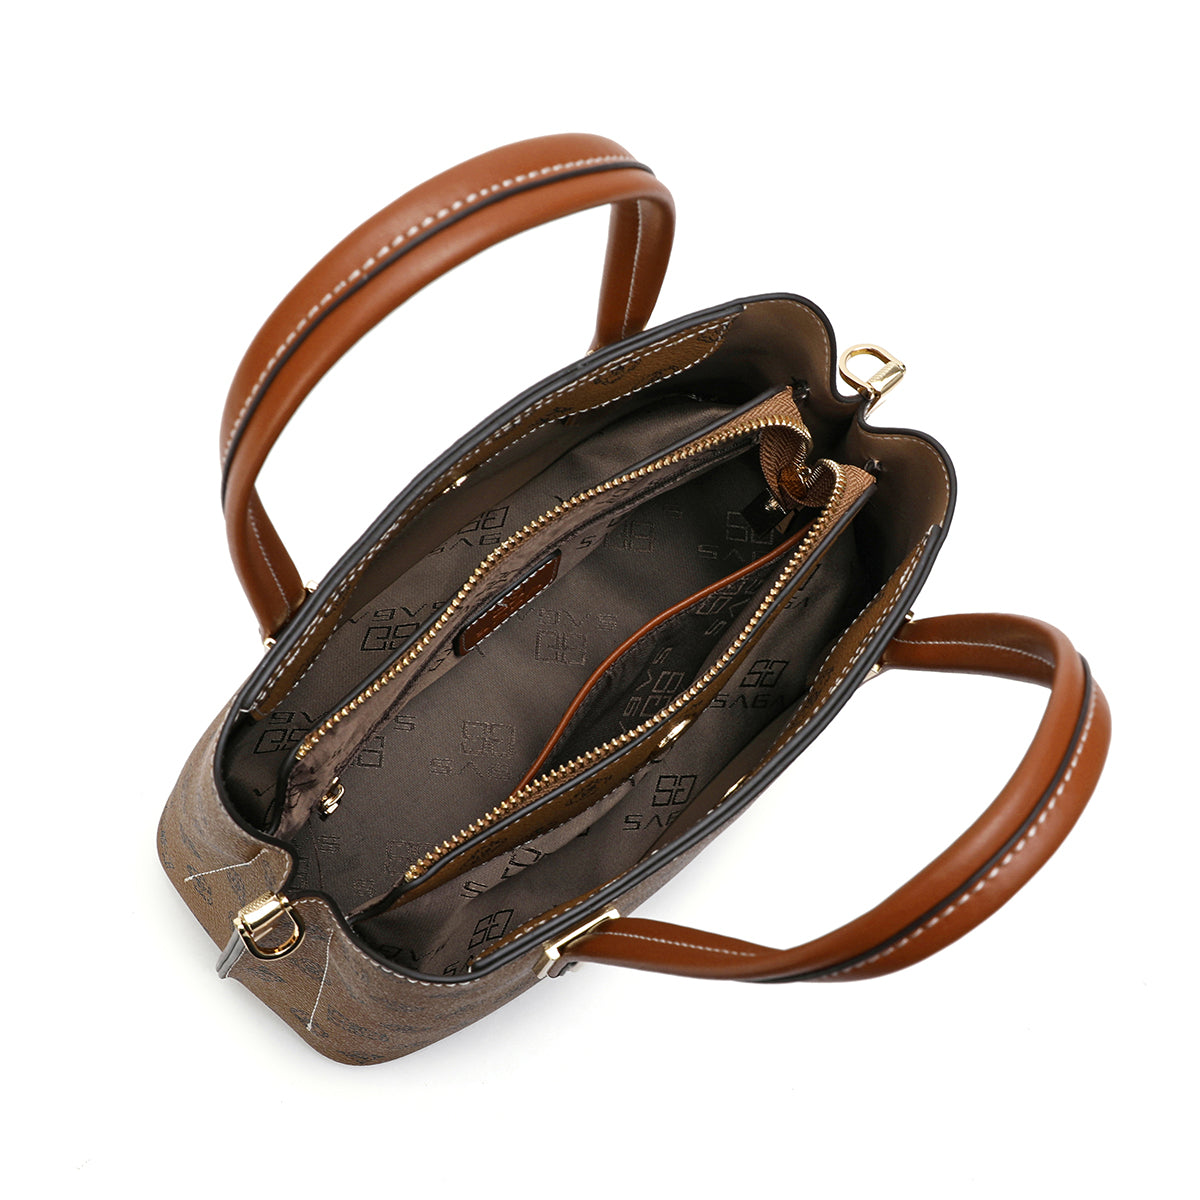 Luxurious handbag with shoulder strap, width 27 cm, brown or tan color